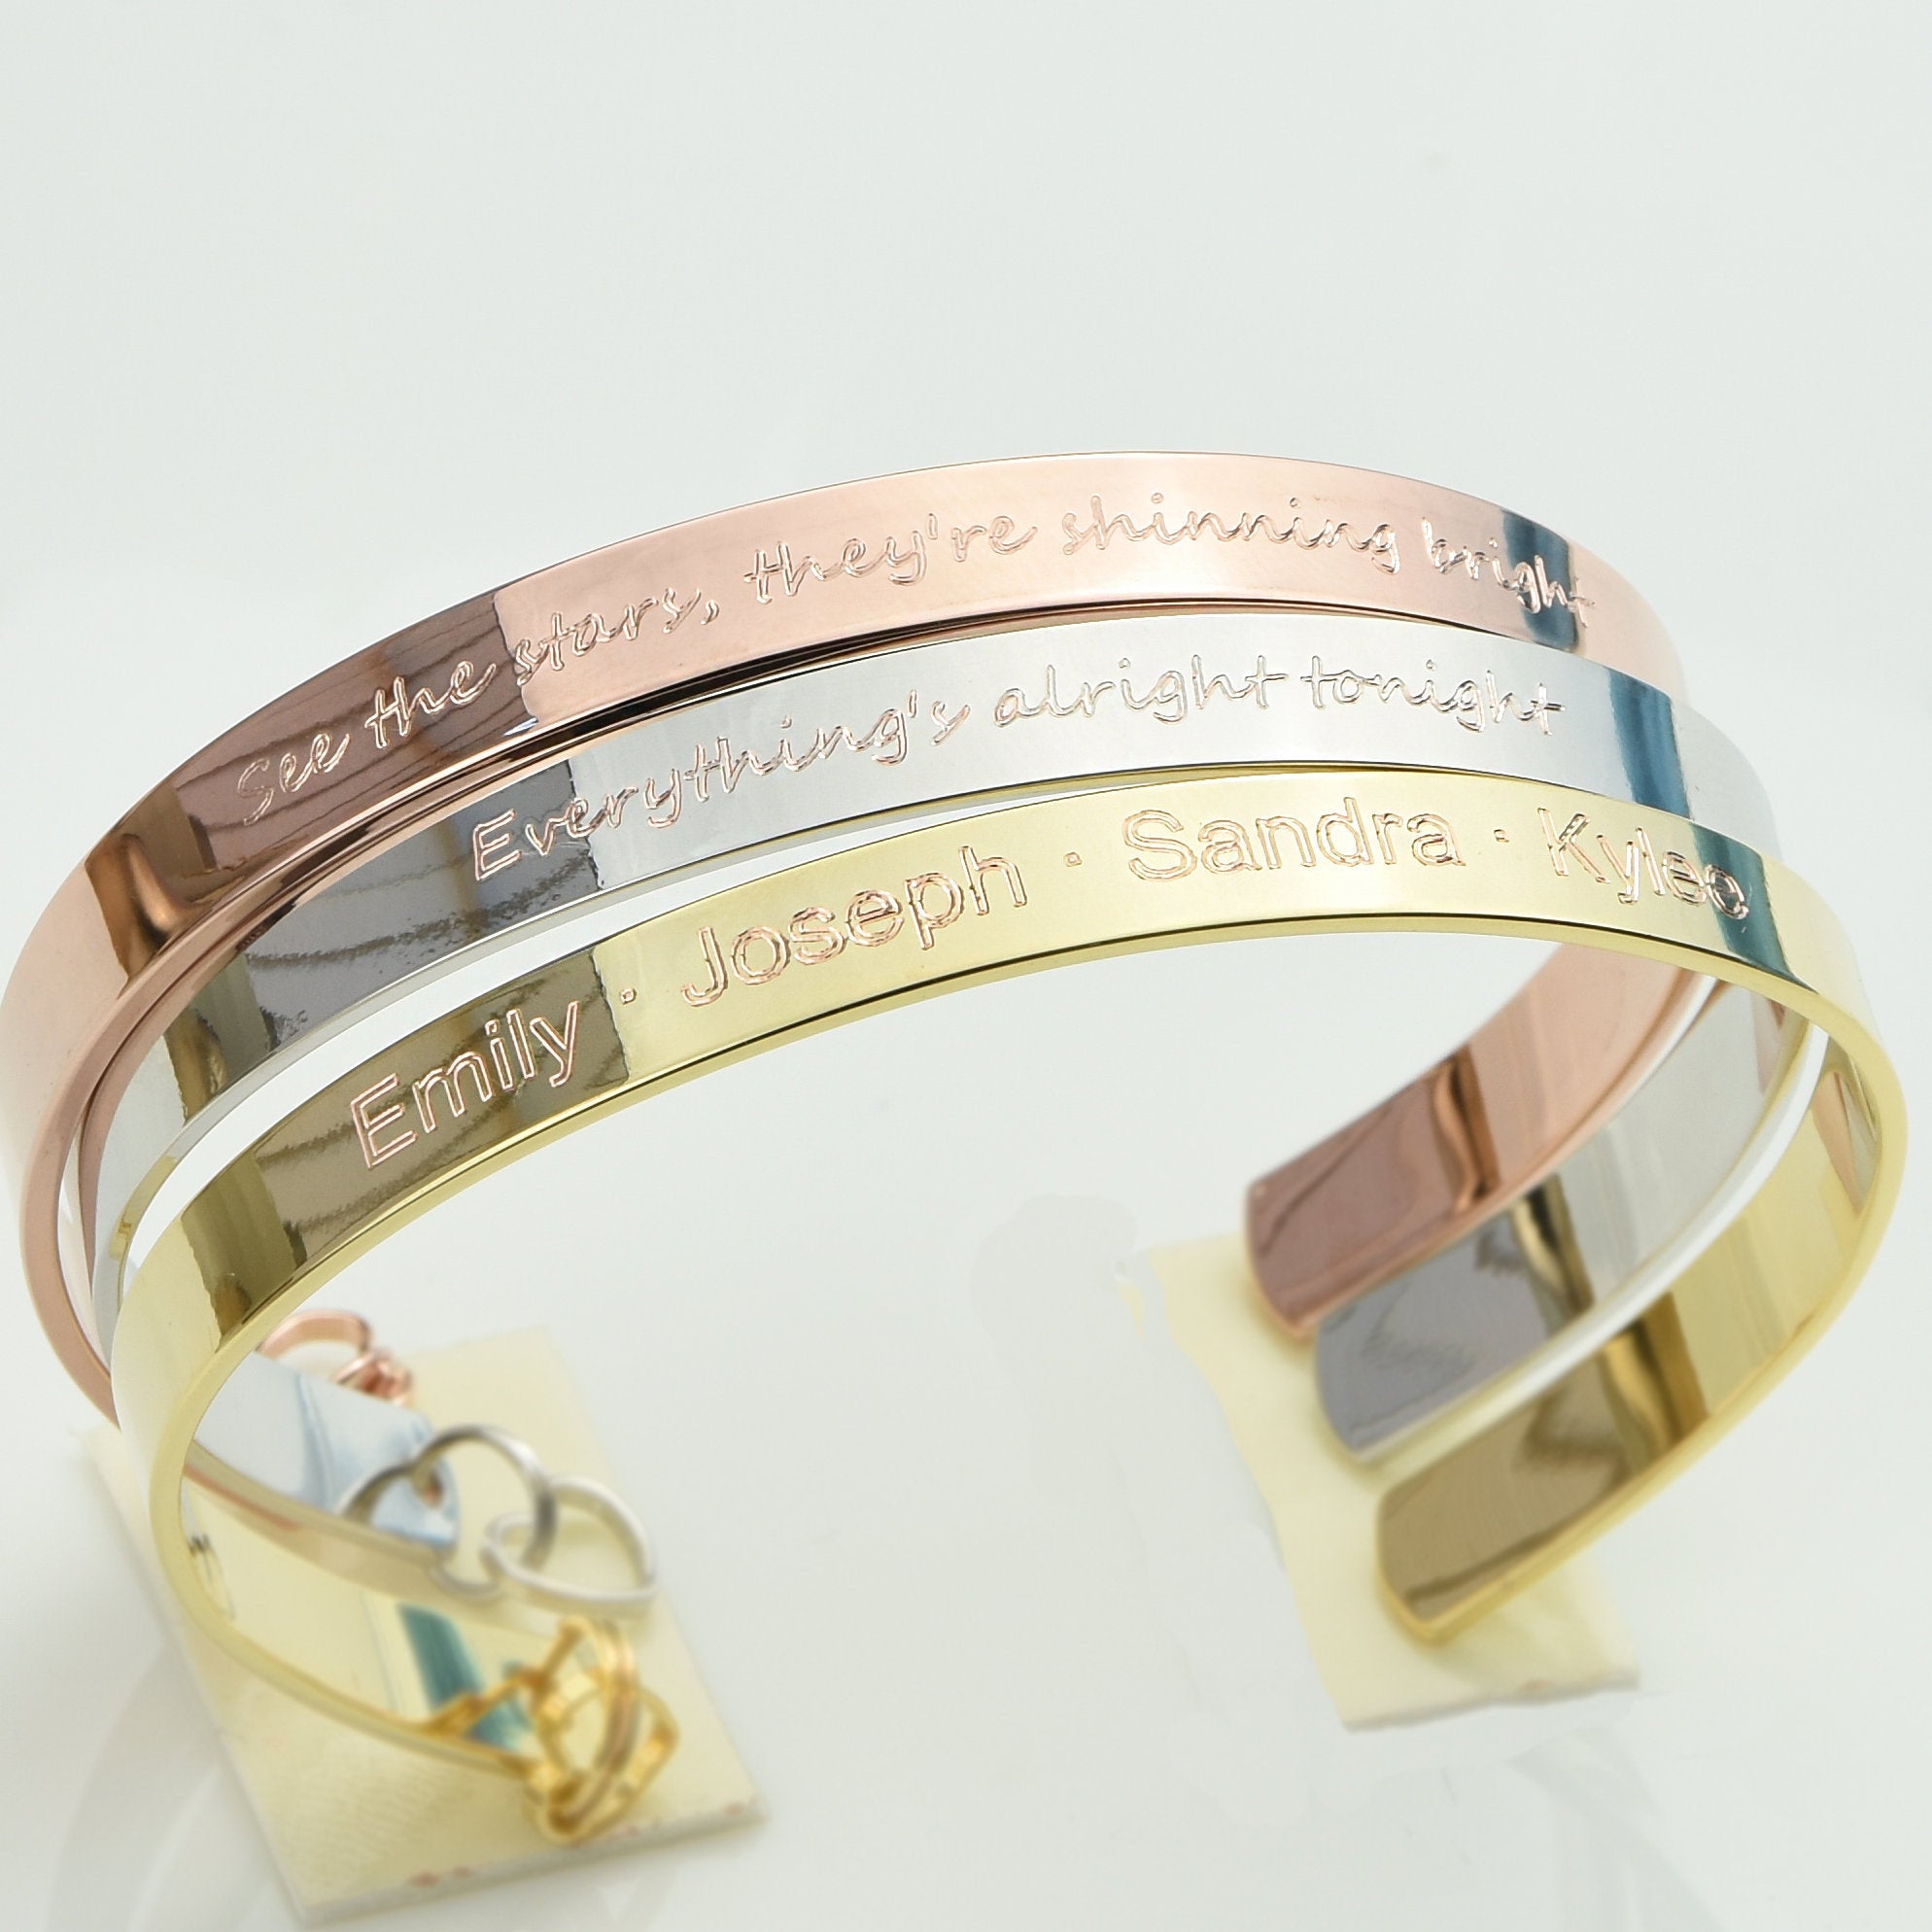 Personalized Engraved Bracelets for Men | JoyAmo Jewelry